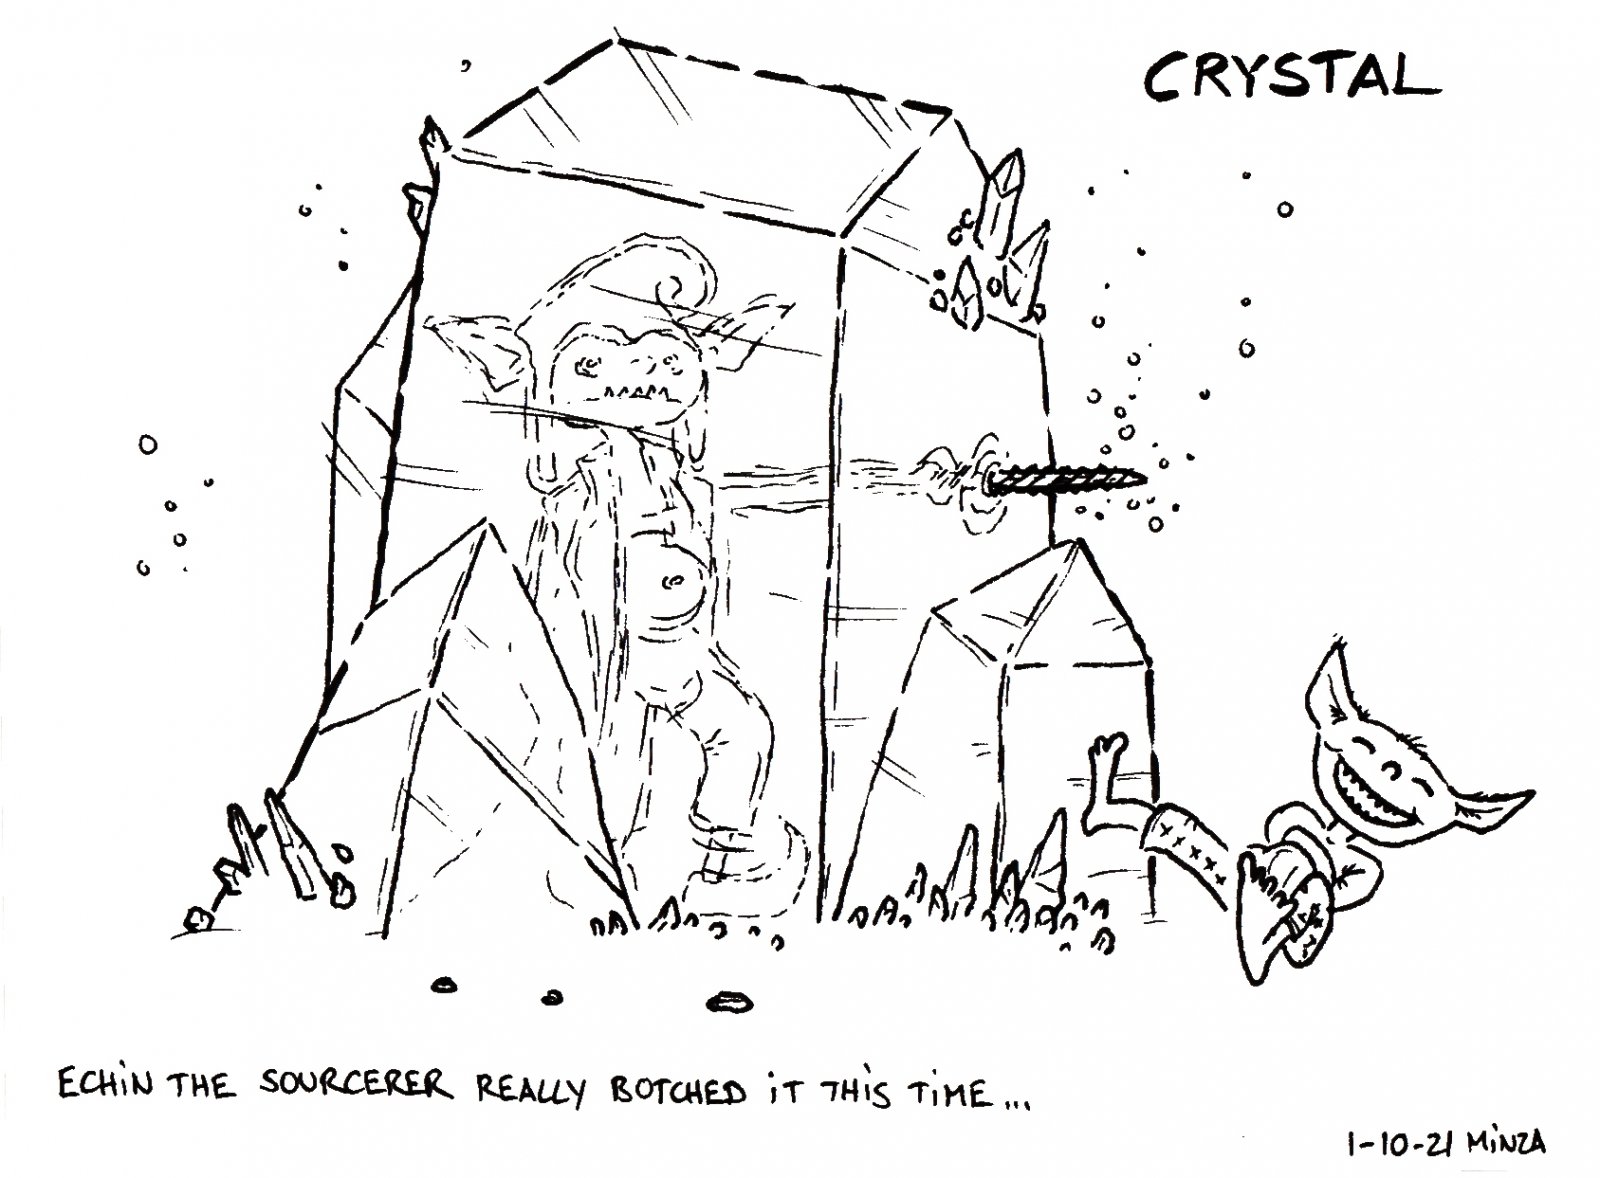 01 - Crystal.jpg